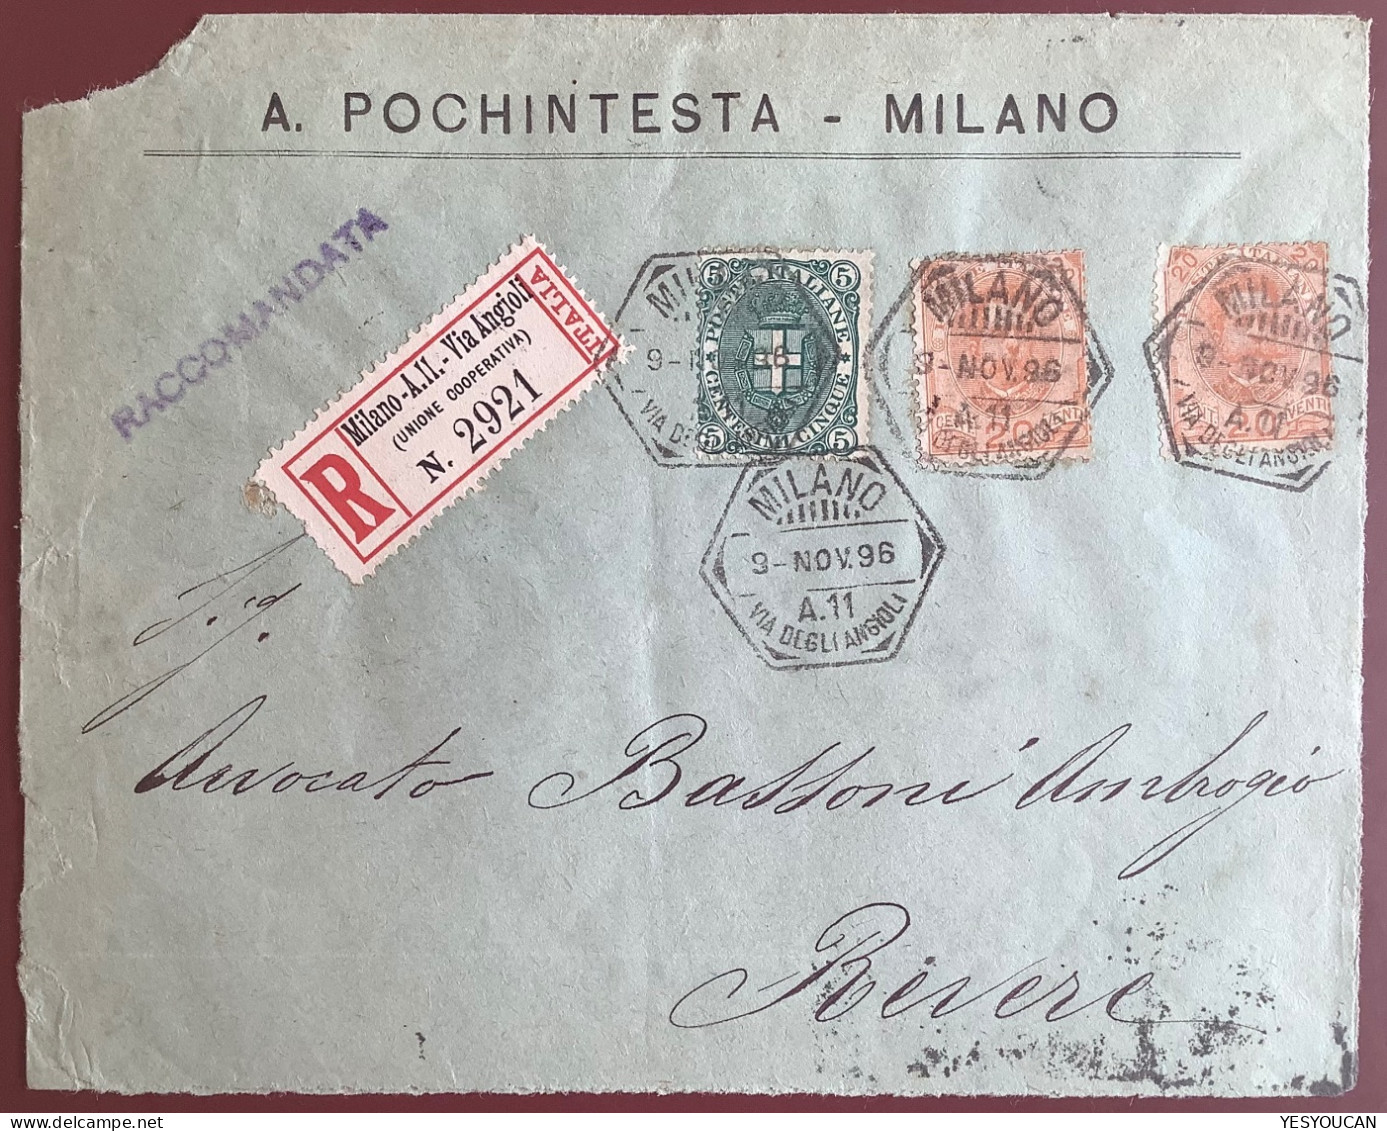 RR ! RACCOMANDATA Agenzie Postali MILANO A11 VIA ANGIOLI/UNIONE COOPERATIVA 1896 Lettera Italia Umberto (angels Anges - Poststempel